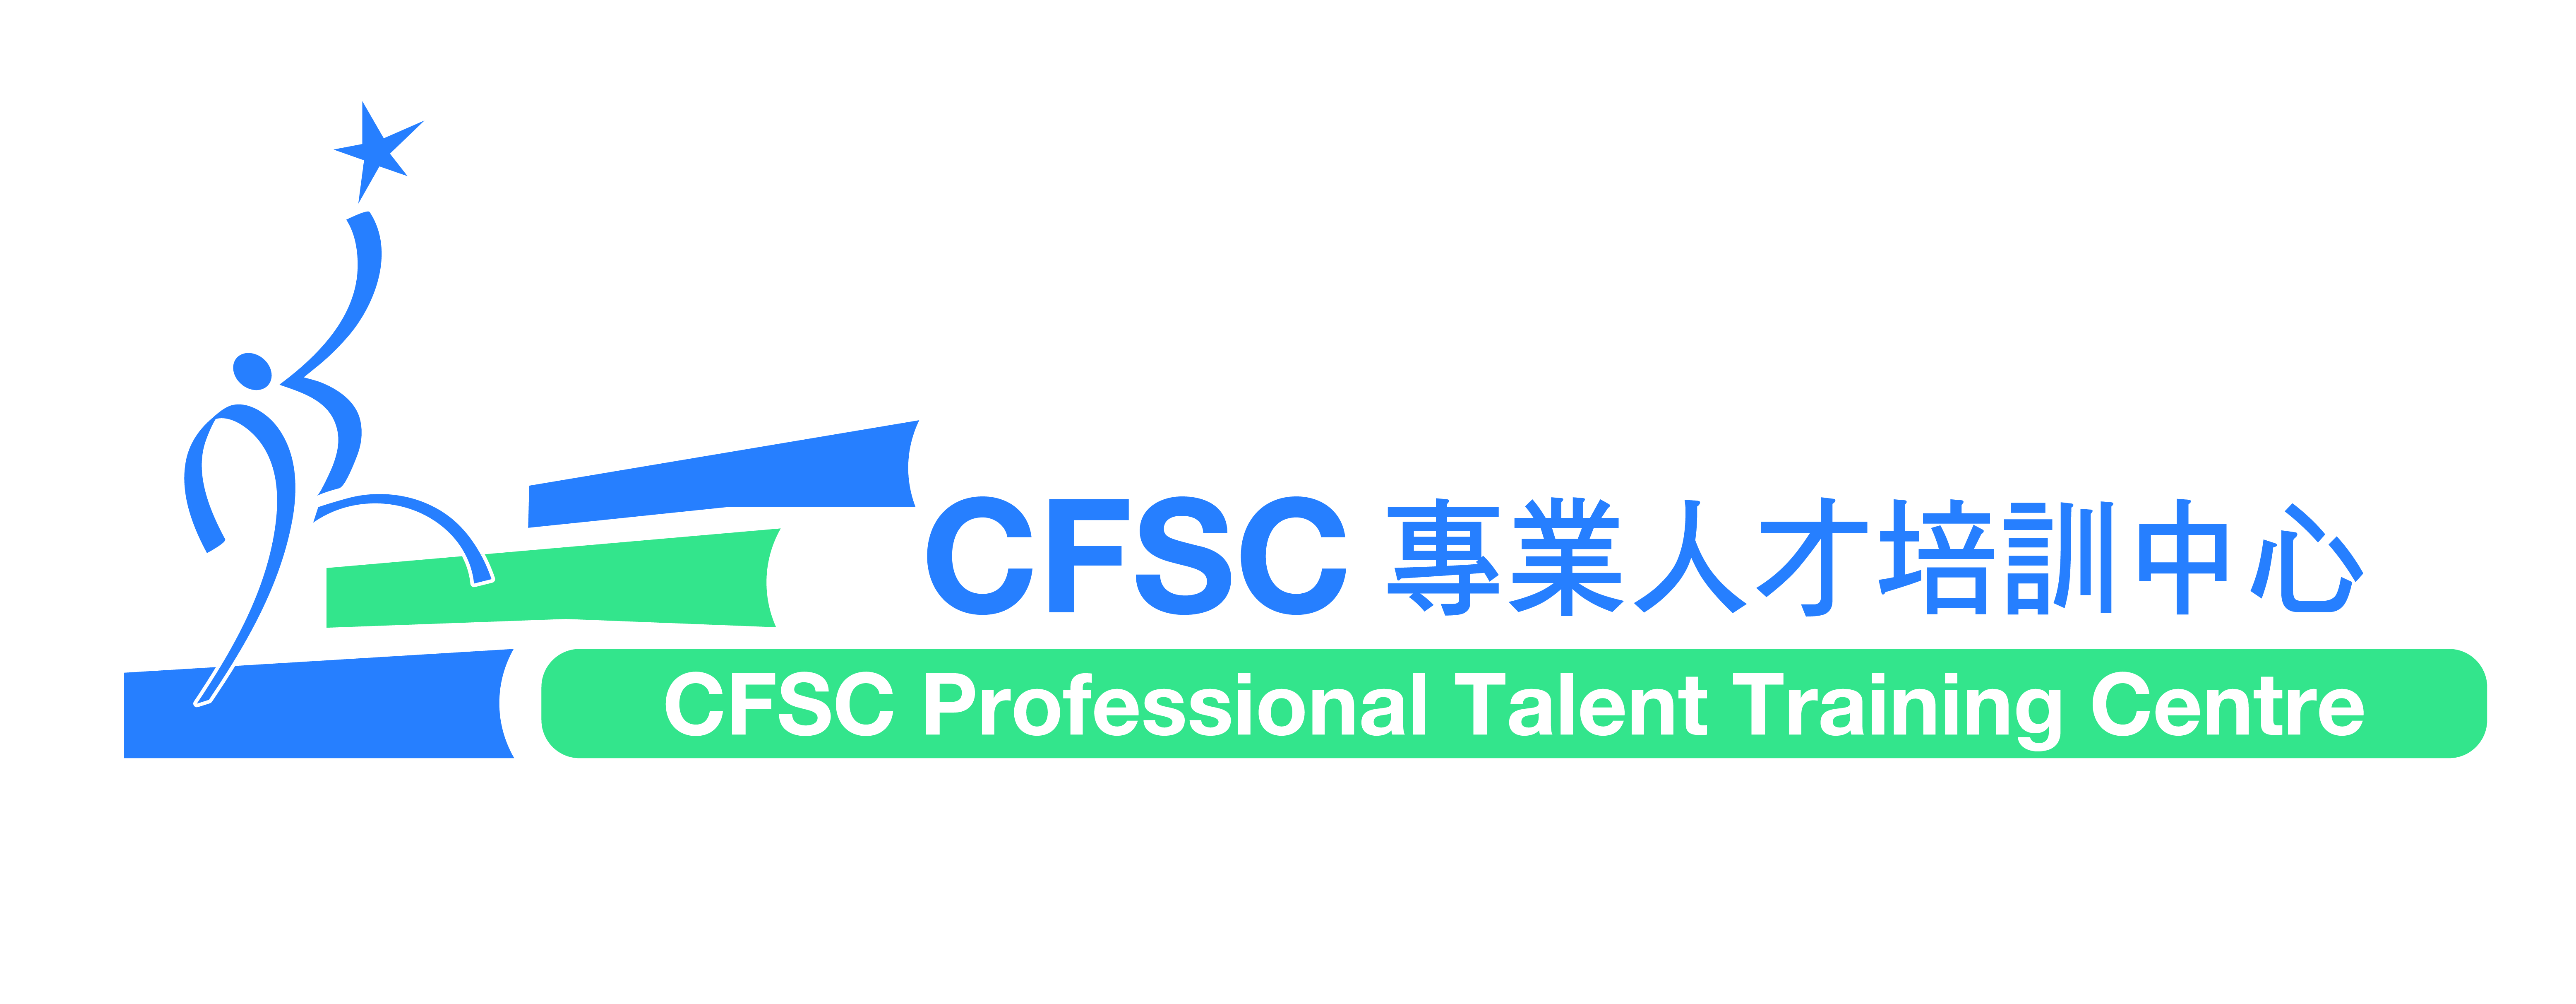 CFSC專業人才培訓中心標志